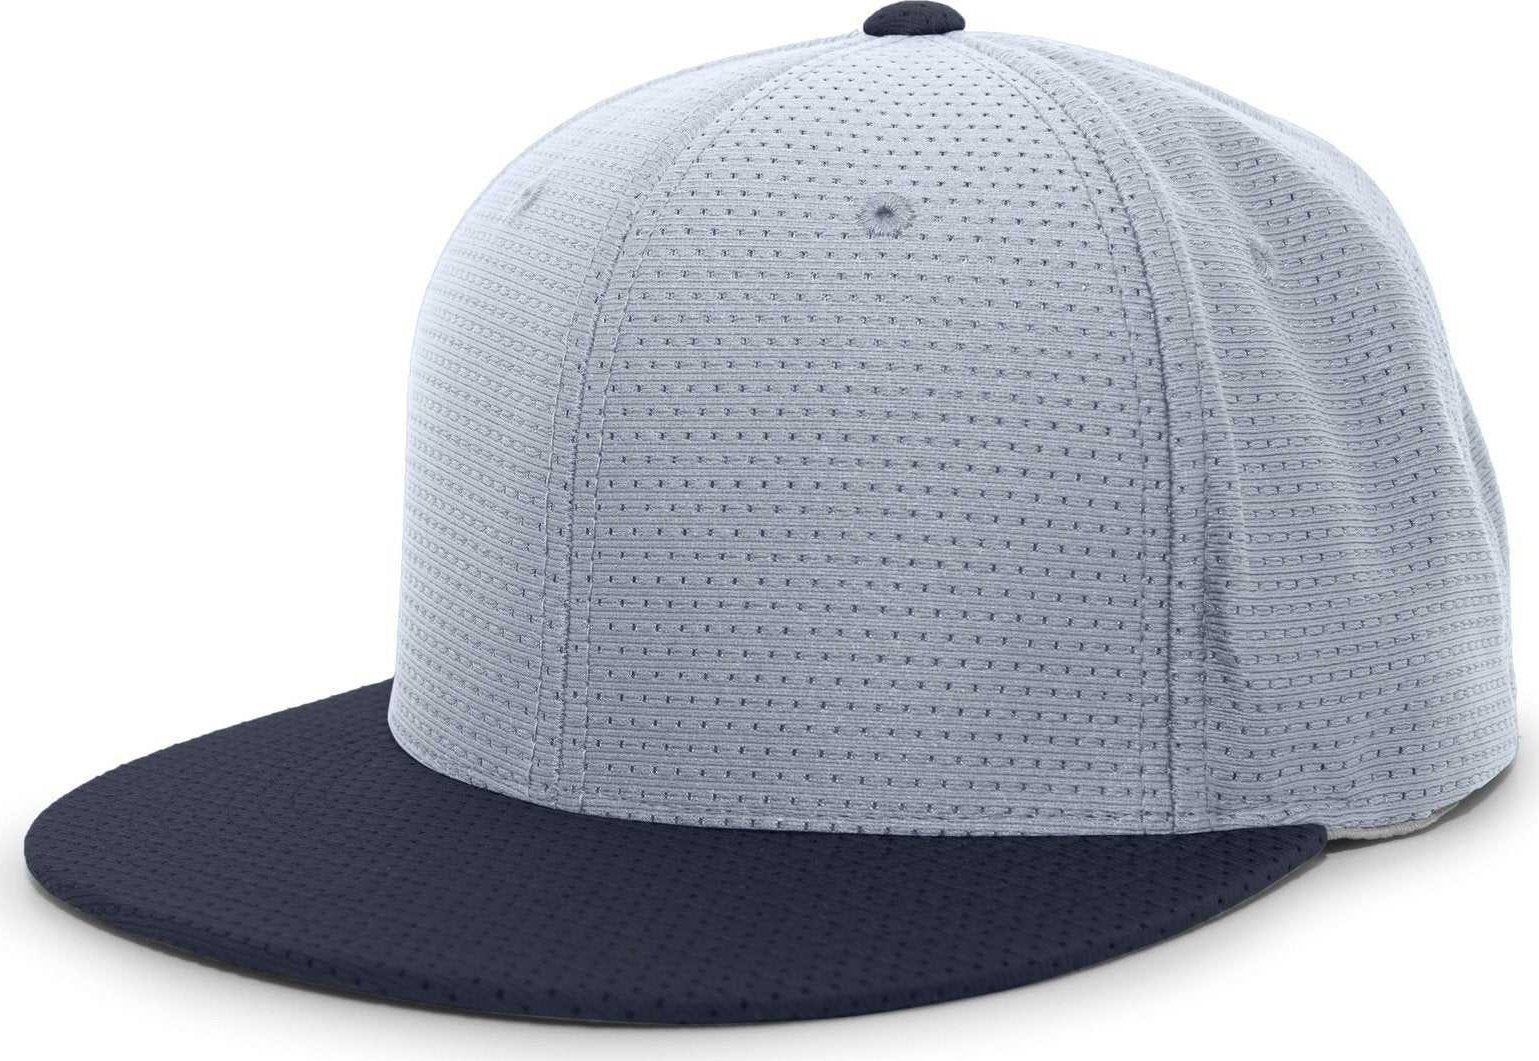 Pacific Headwear ES818 Air Jersey Performance Flexfit Cap - Silver Navy - HIT a Double